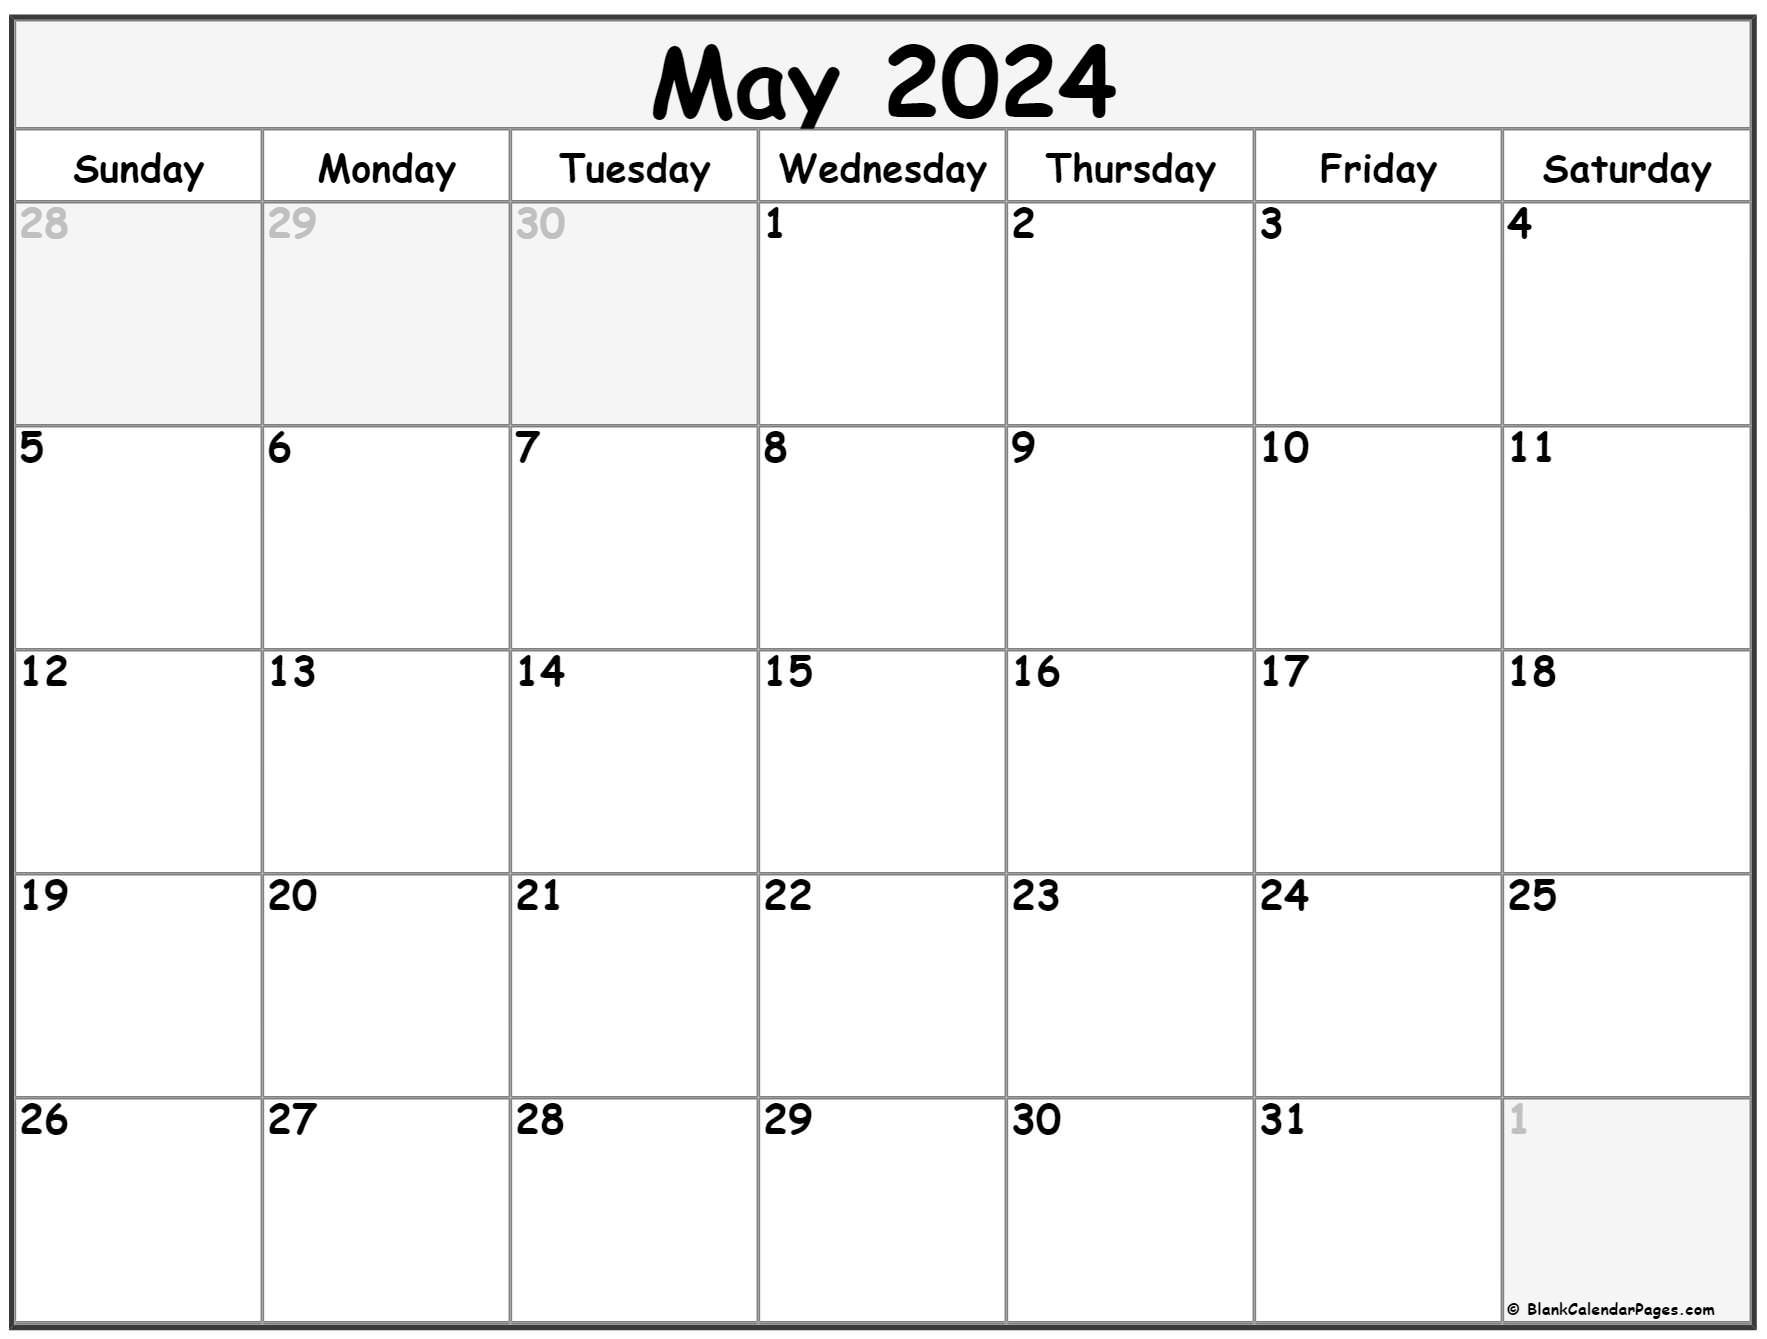 december-2022-calendar-australia